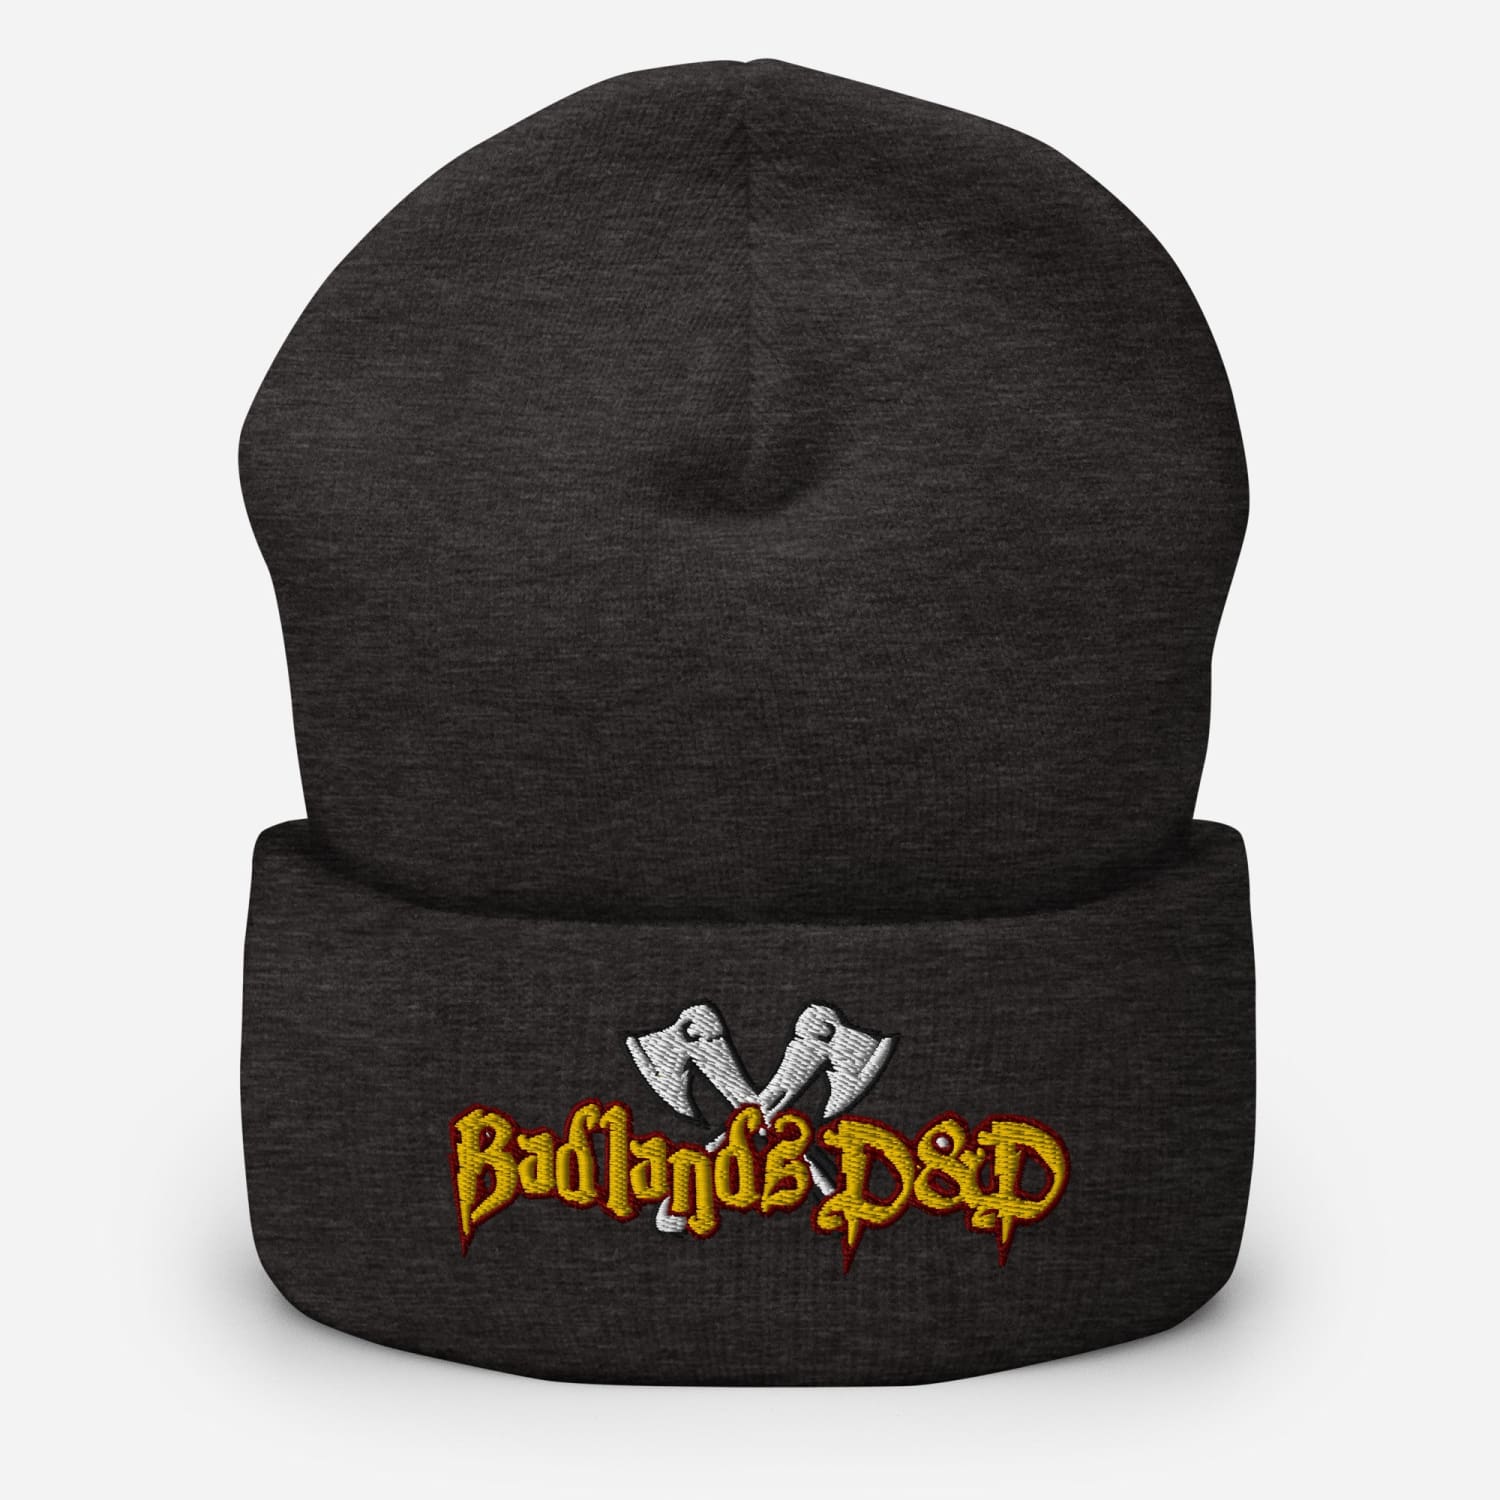 Badlands D&D Logo Cuffed Knit Beanie / Tuque - Dark Grey